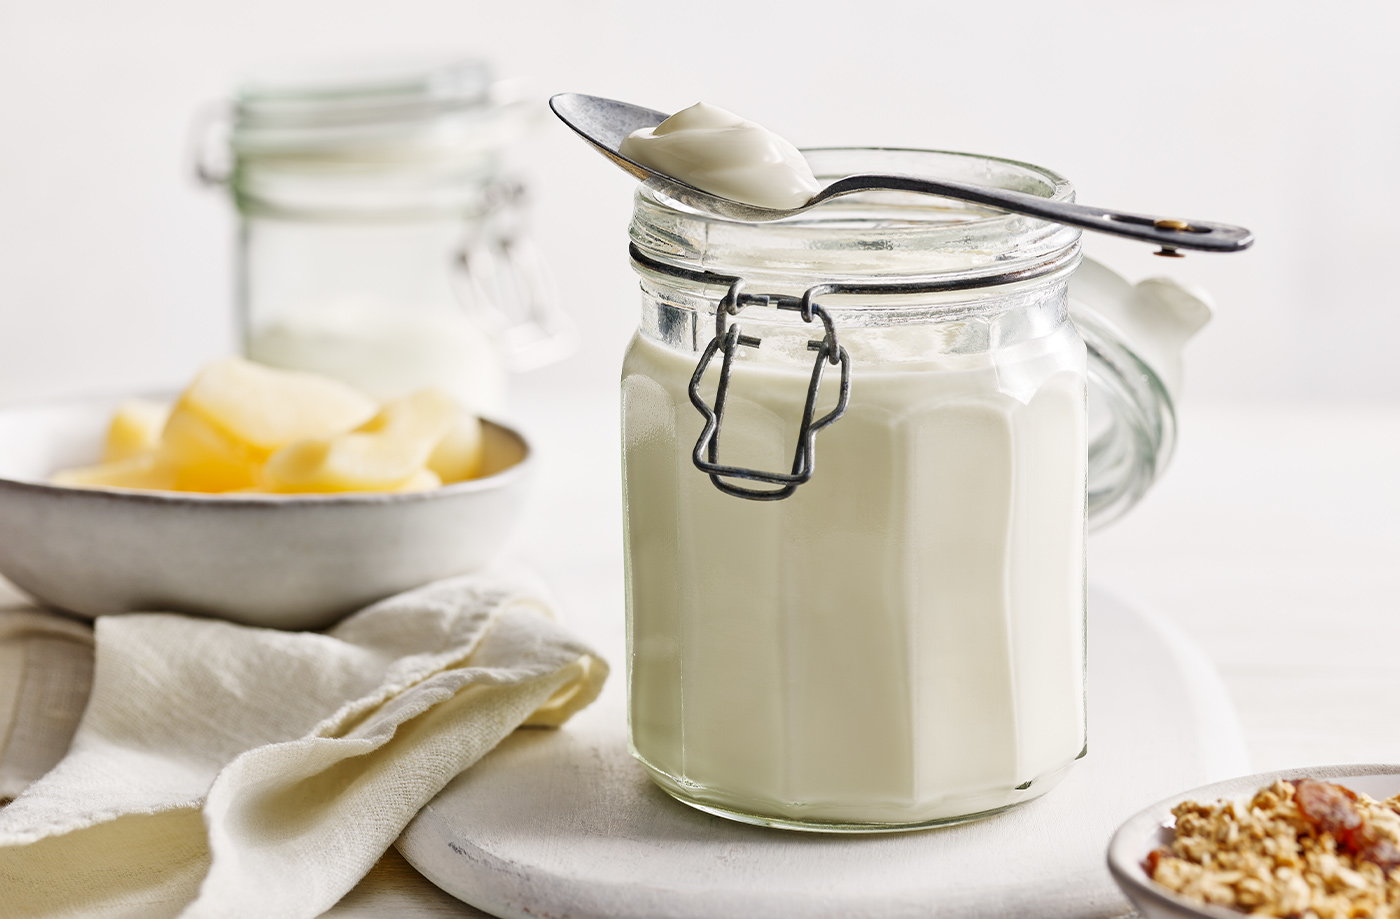 How to Make Yogurt at Home